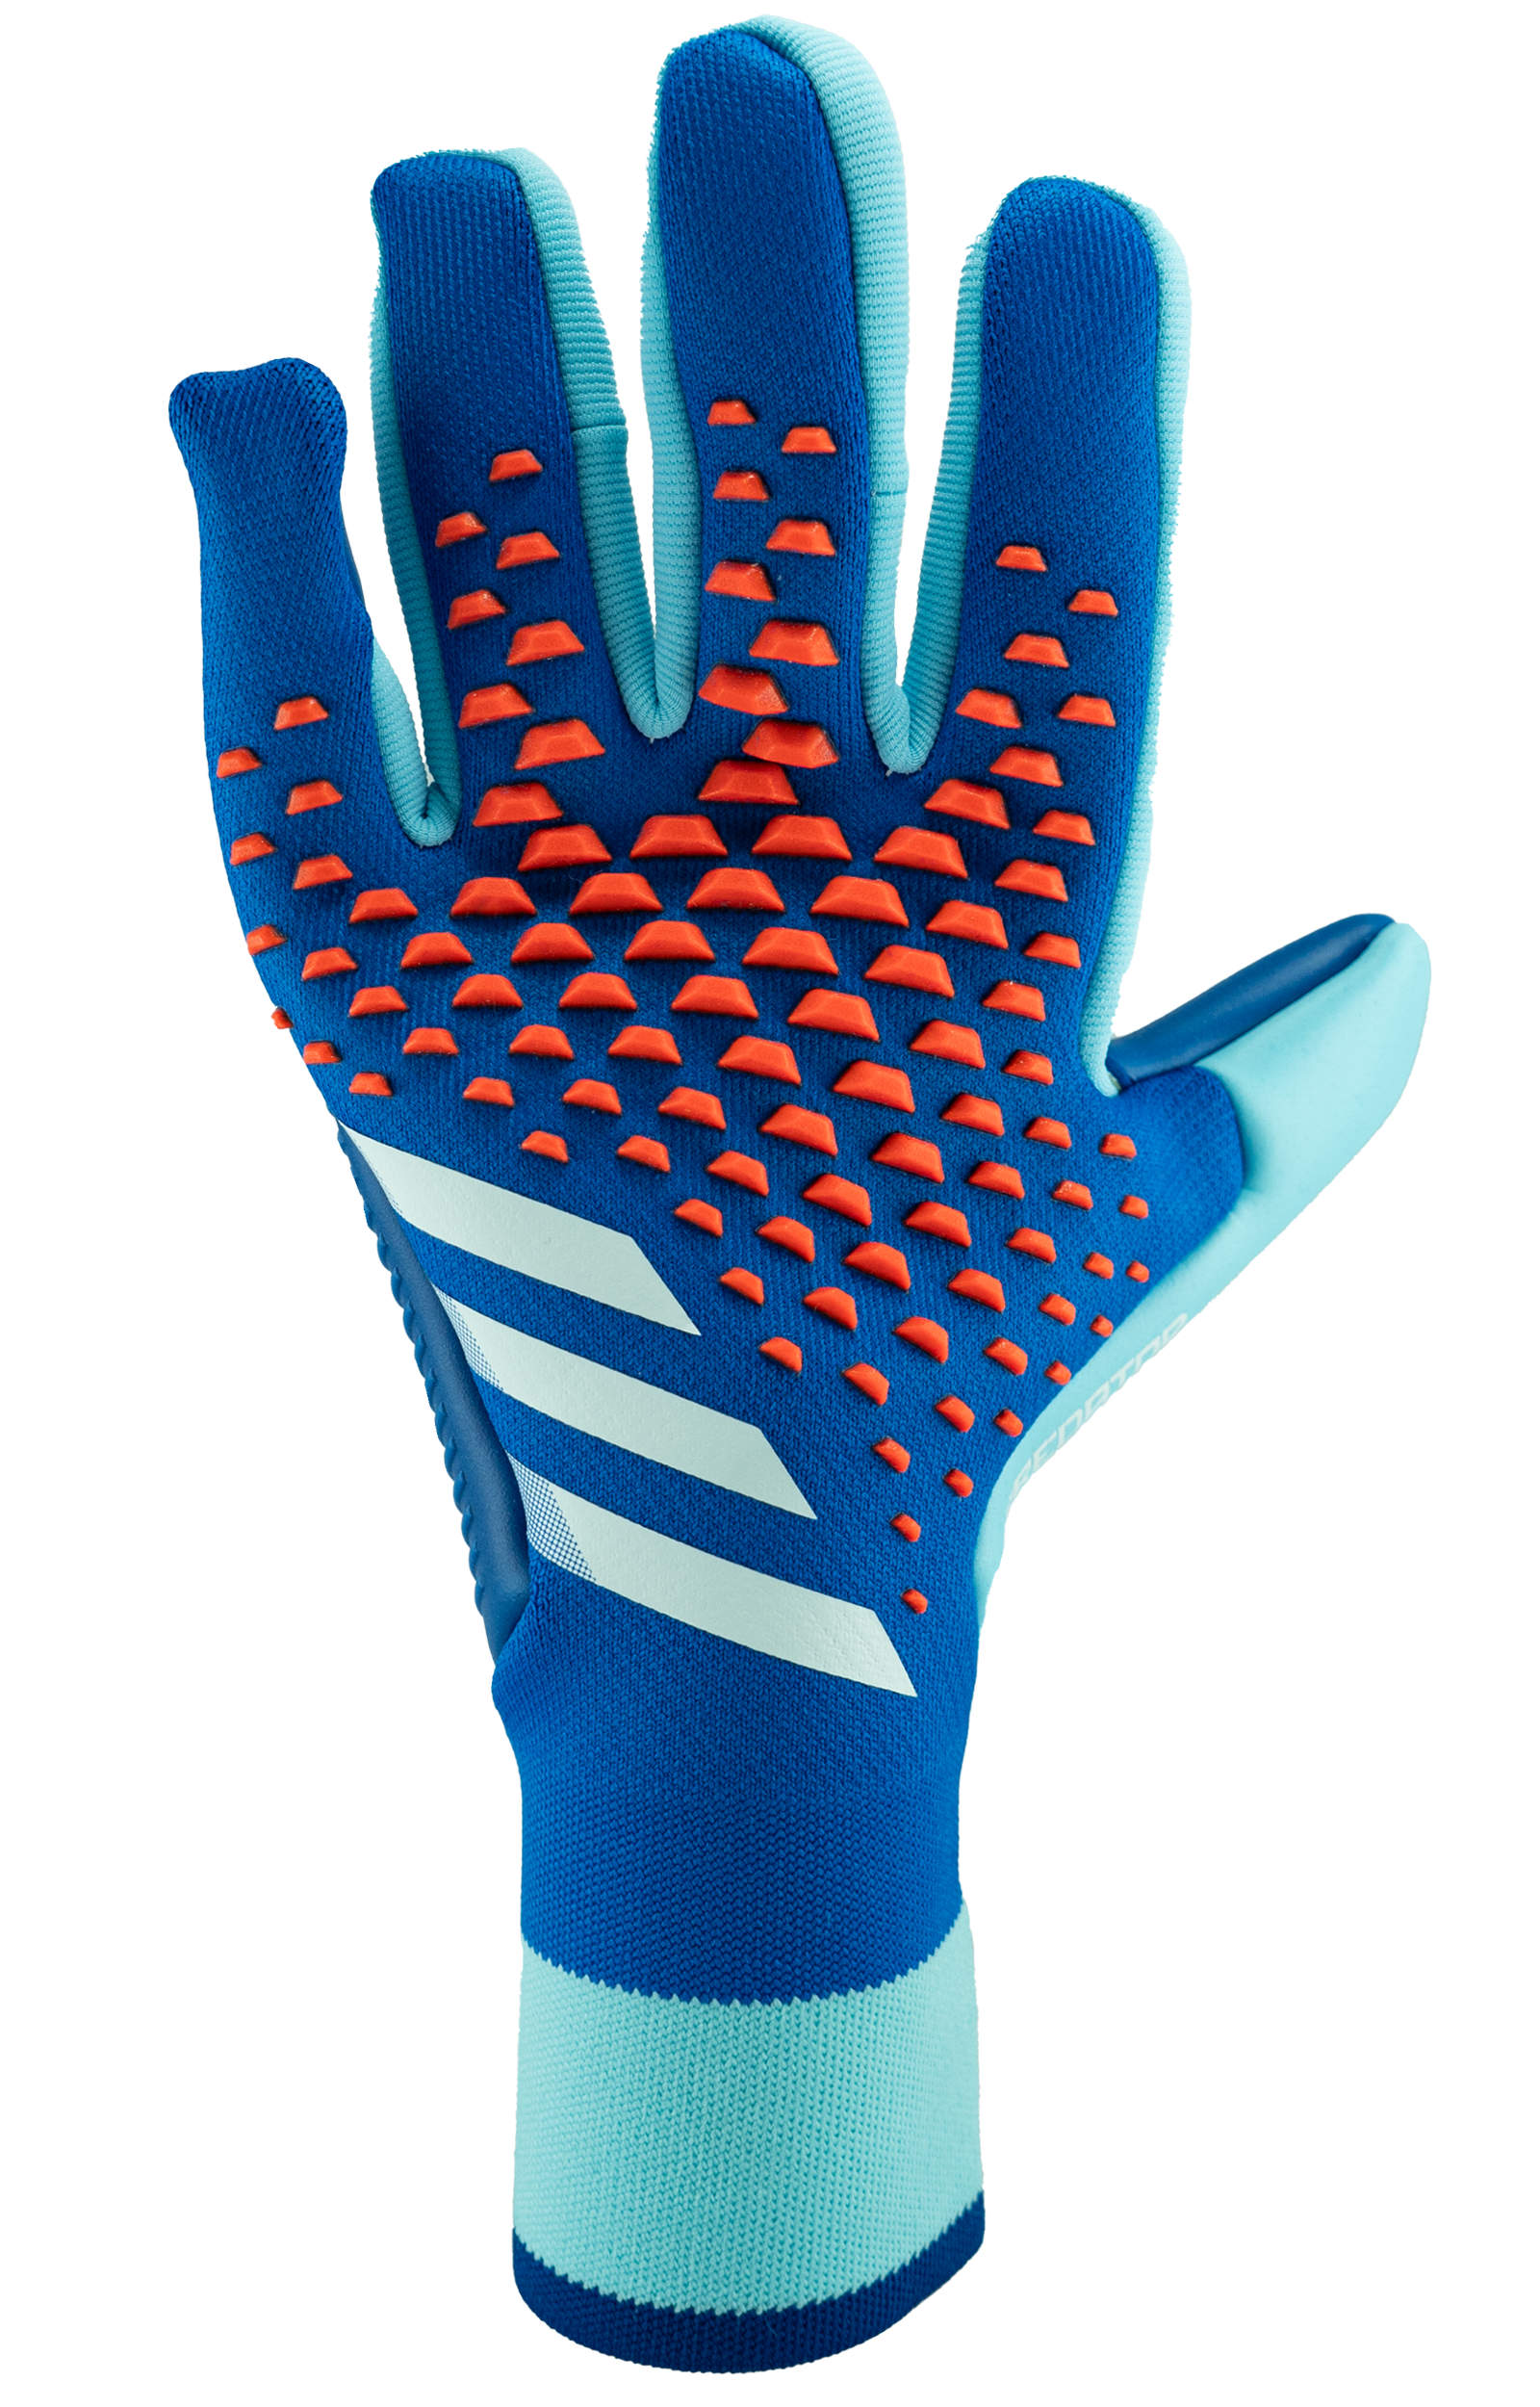 adidas Predator Pro Gloves